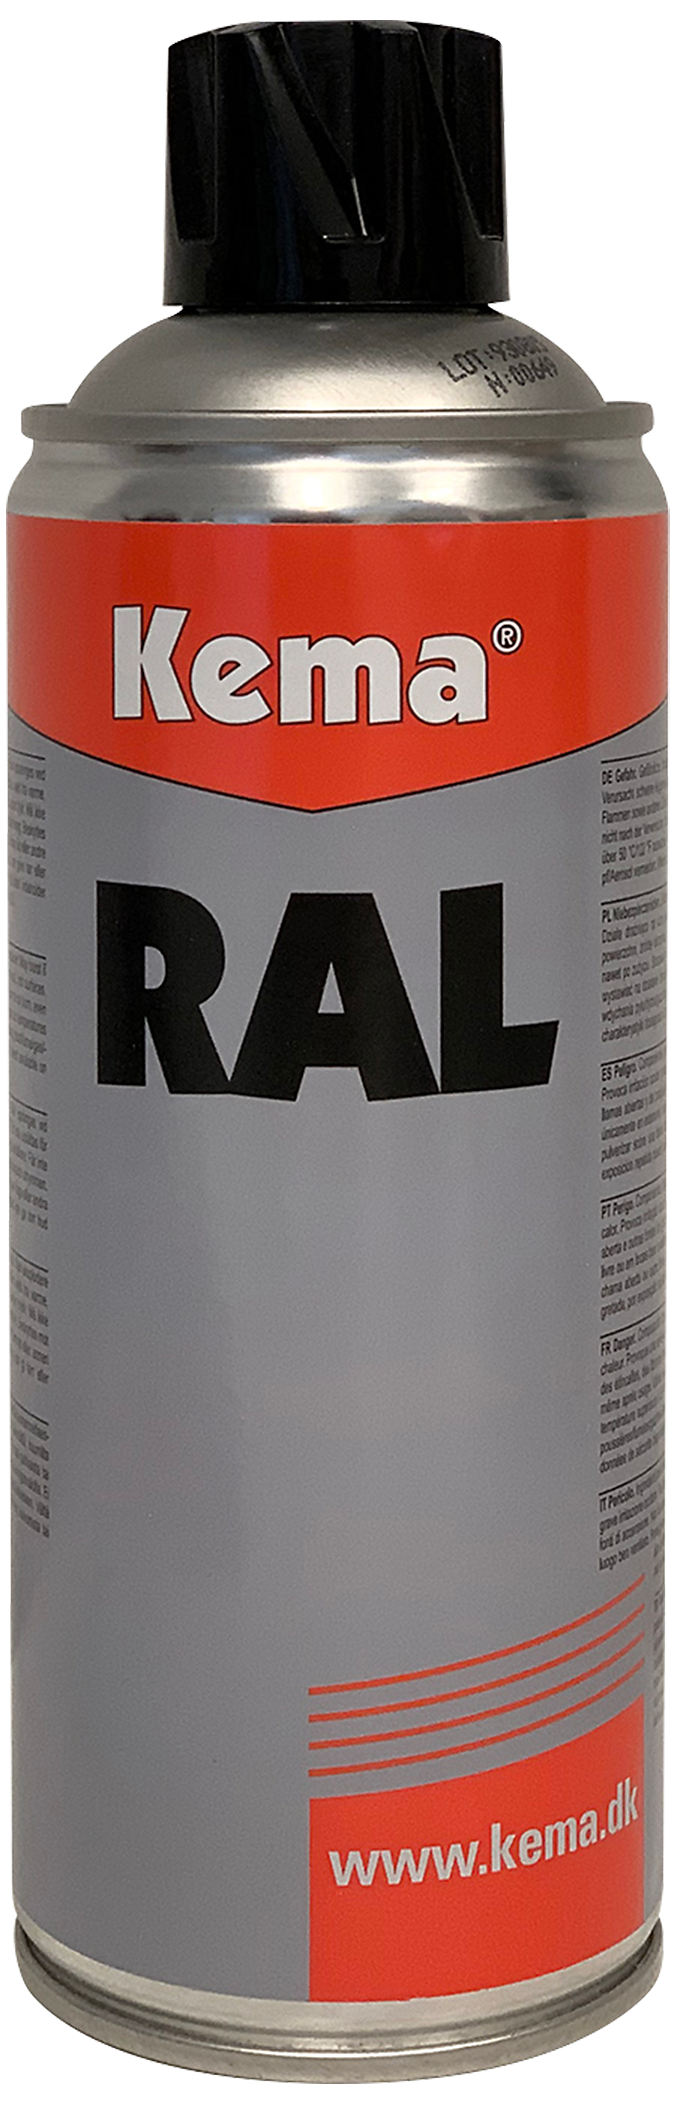 Kema industrilak RAL-3000 flammerød spray 400ml 317356